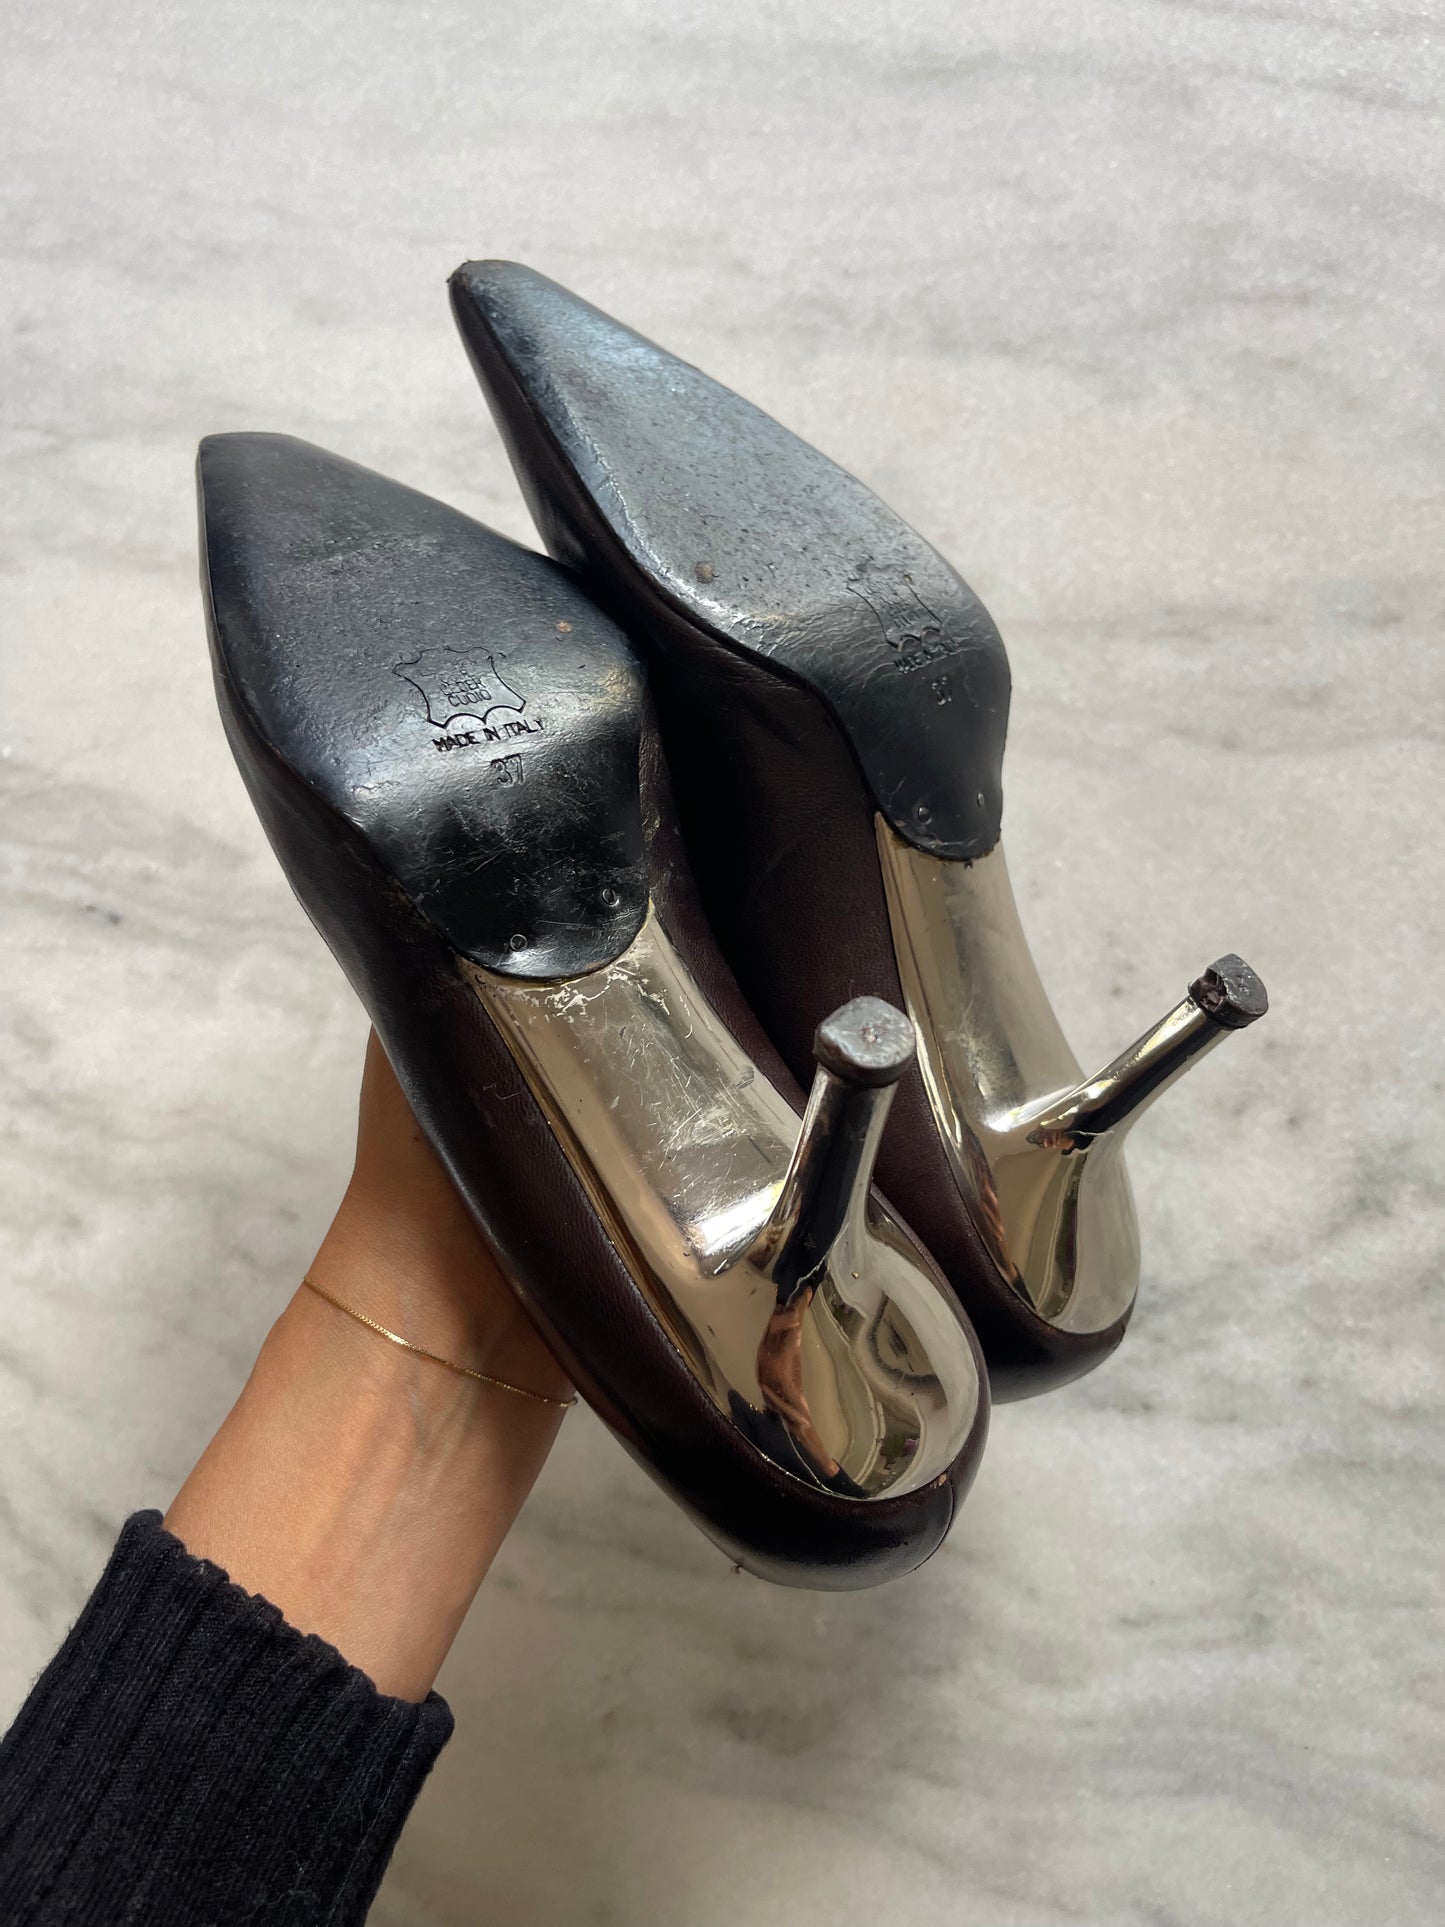 Yves Saint Laurent heels